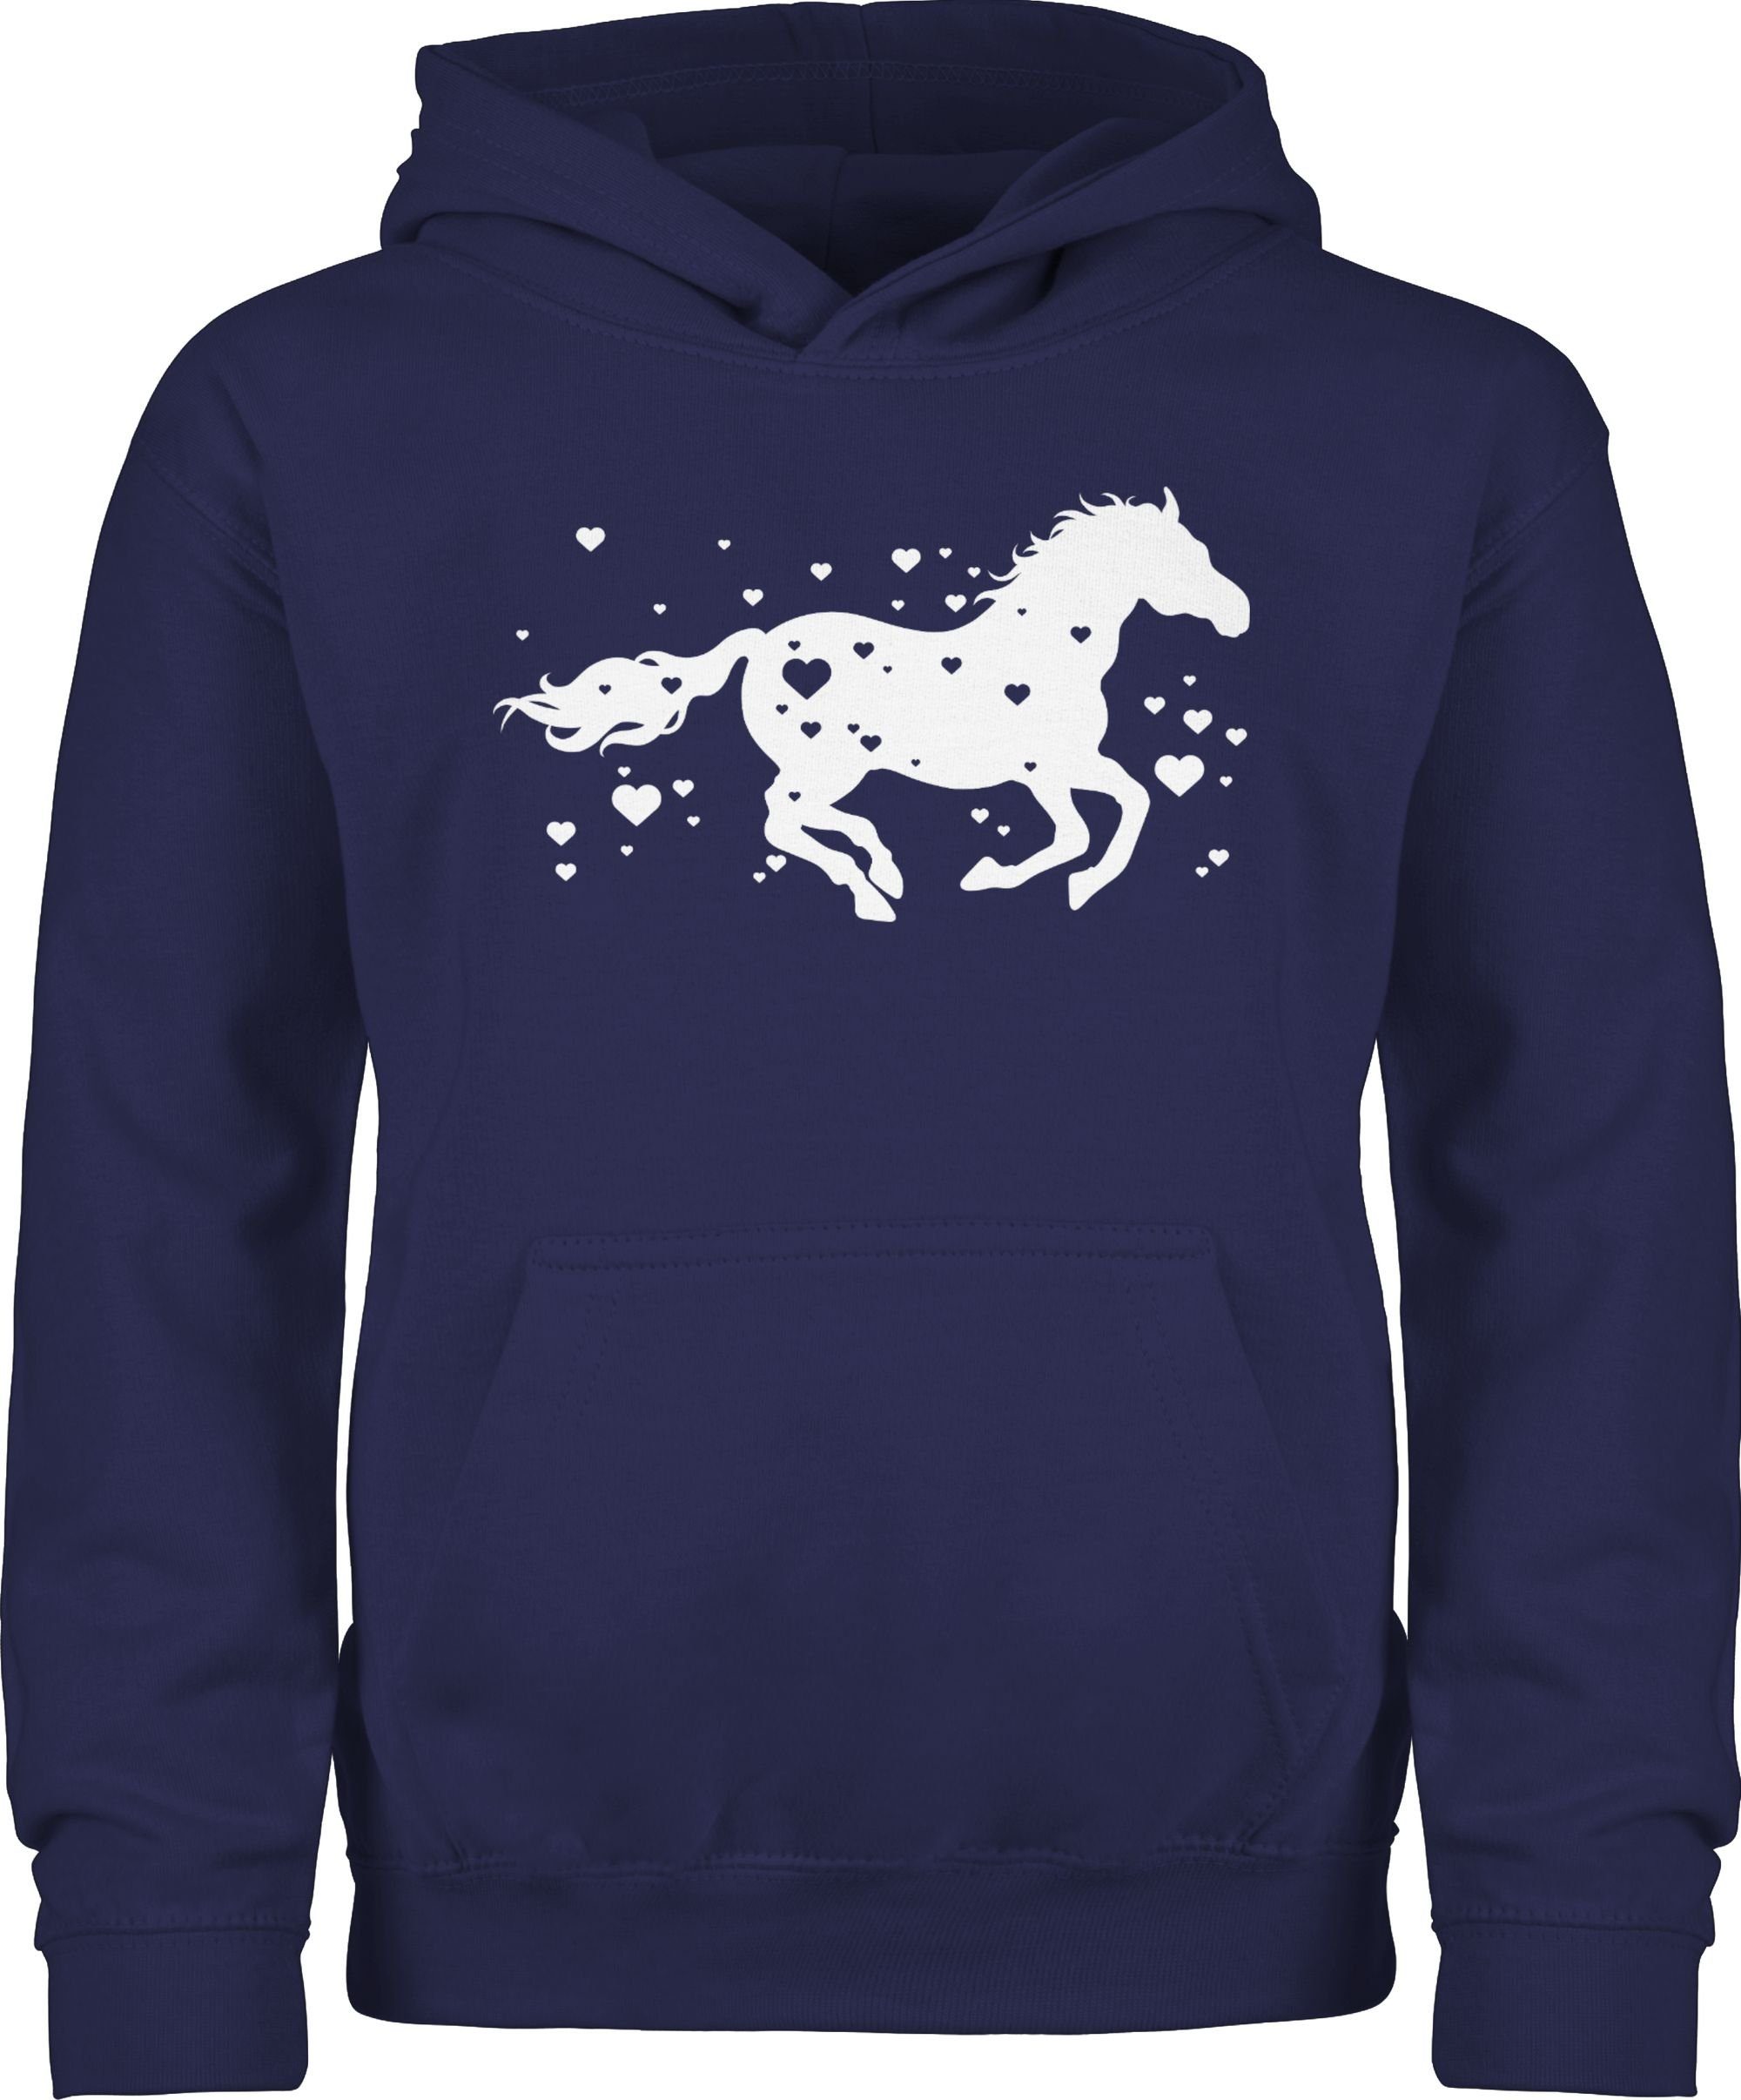 Shirtracer Hoodie Pferd mit Herzen Reiter Reiterin - Pferdeliebhaber Pferde Horse Blau Navy 2 Gesche Pferd